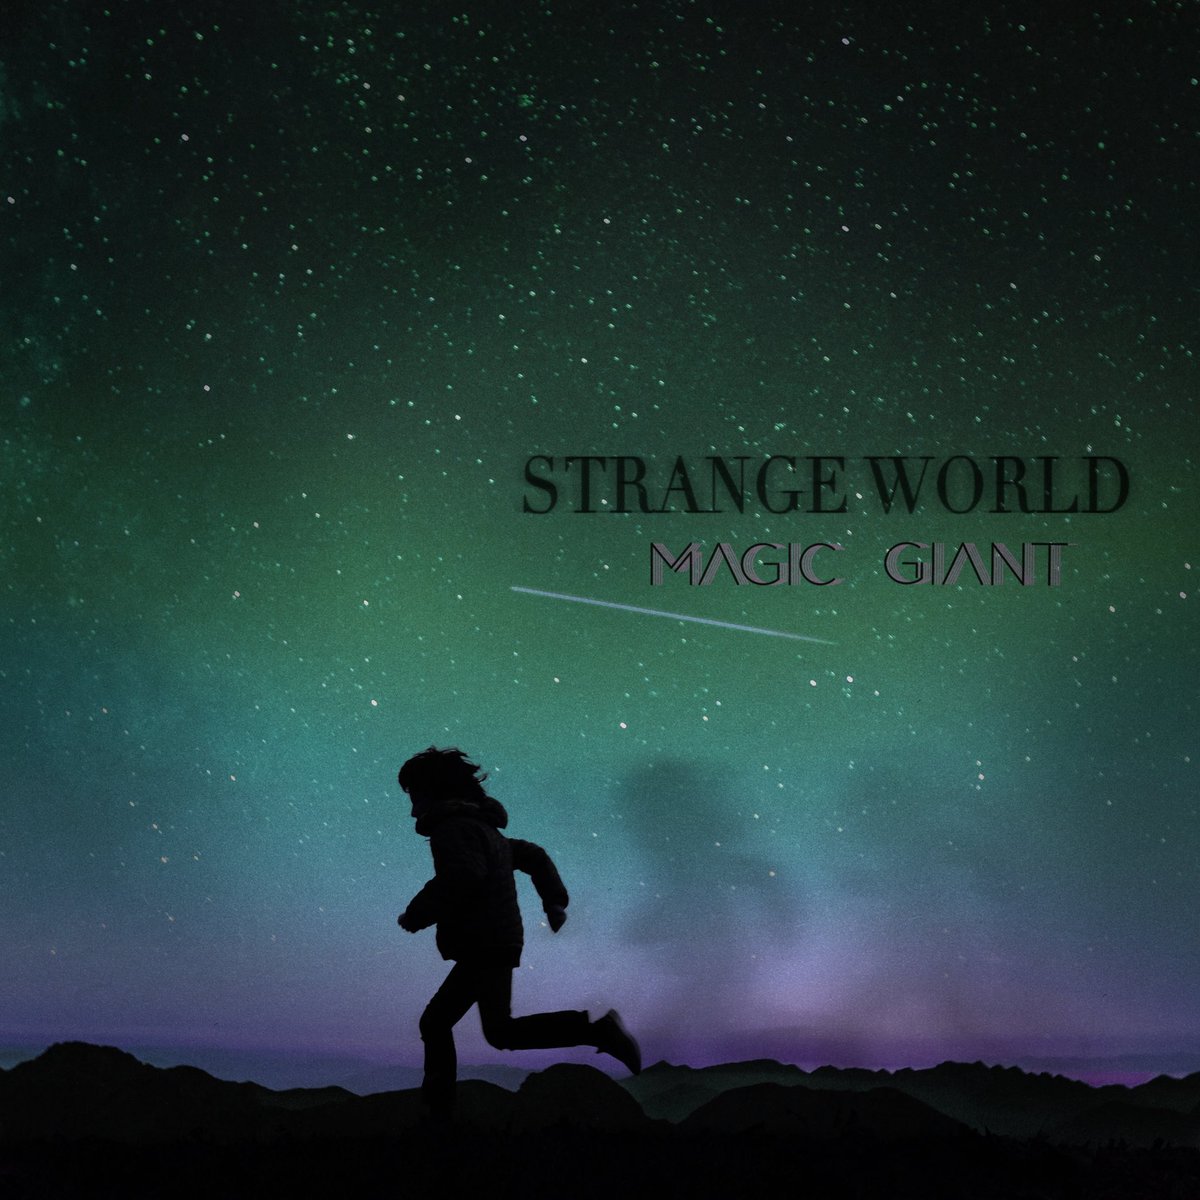 It’s a strange world. Tell me you believe in magic. ffm.to/x6kkm95